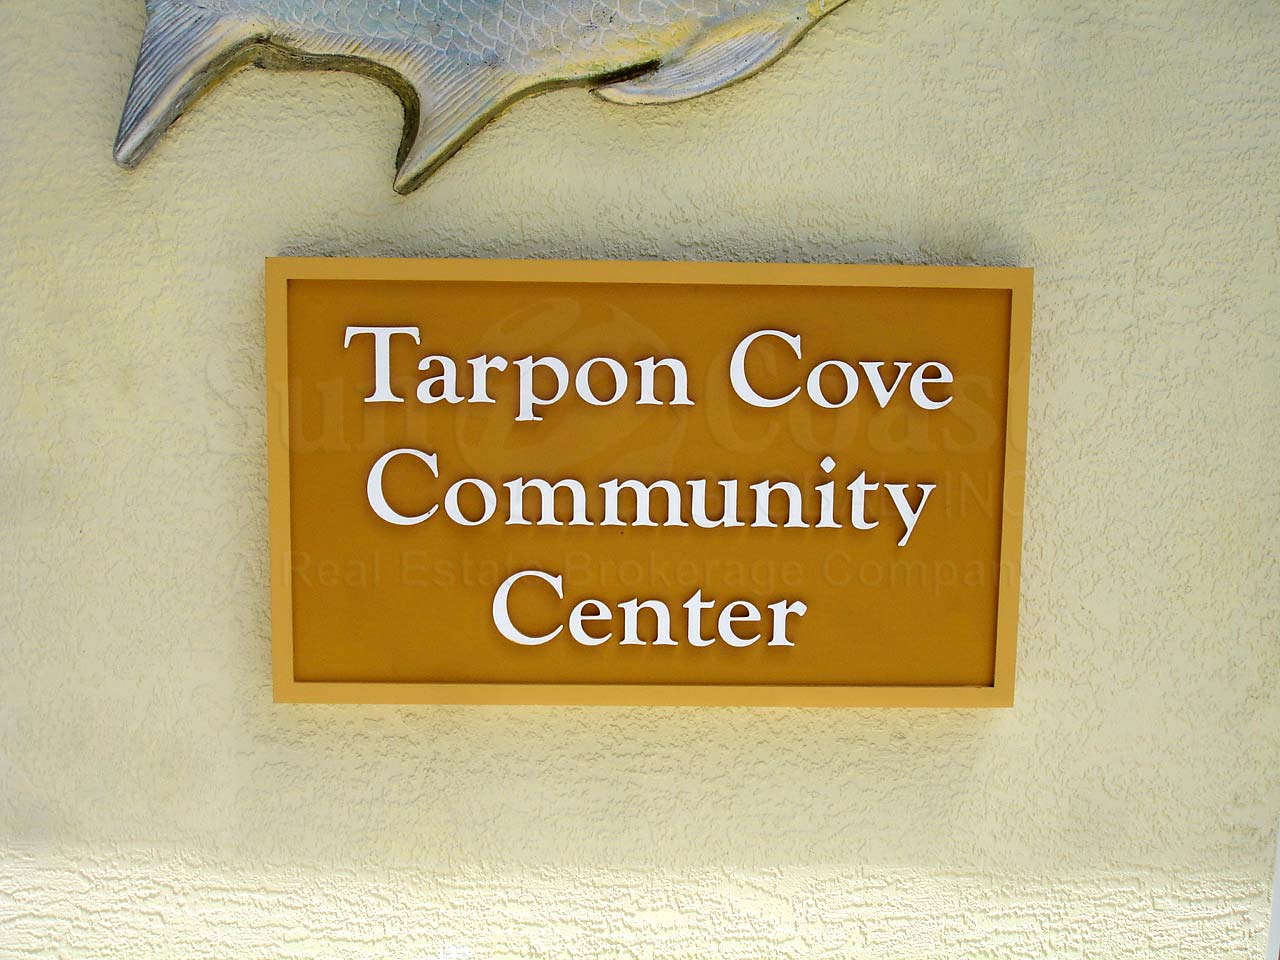 Tarpon Cove Community Center Signage